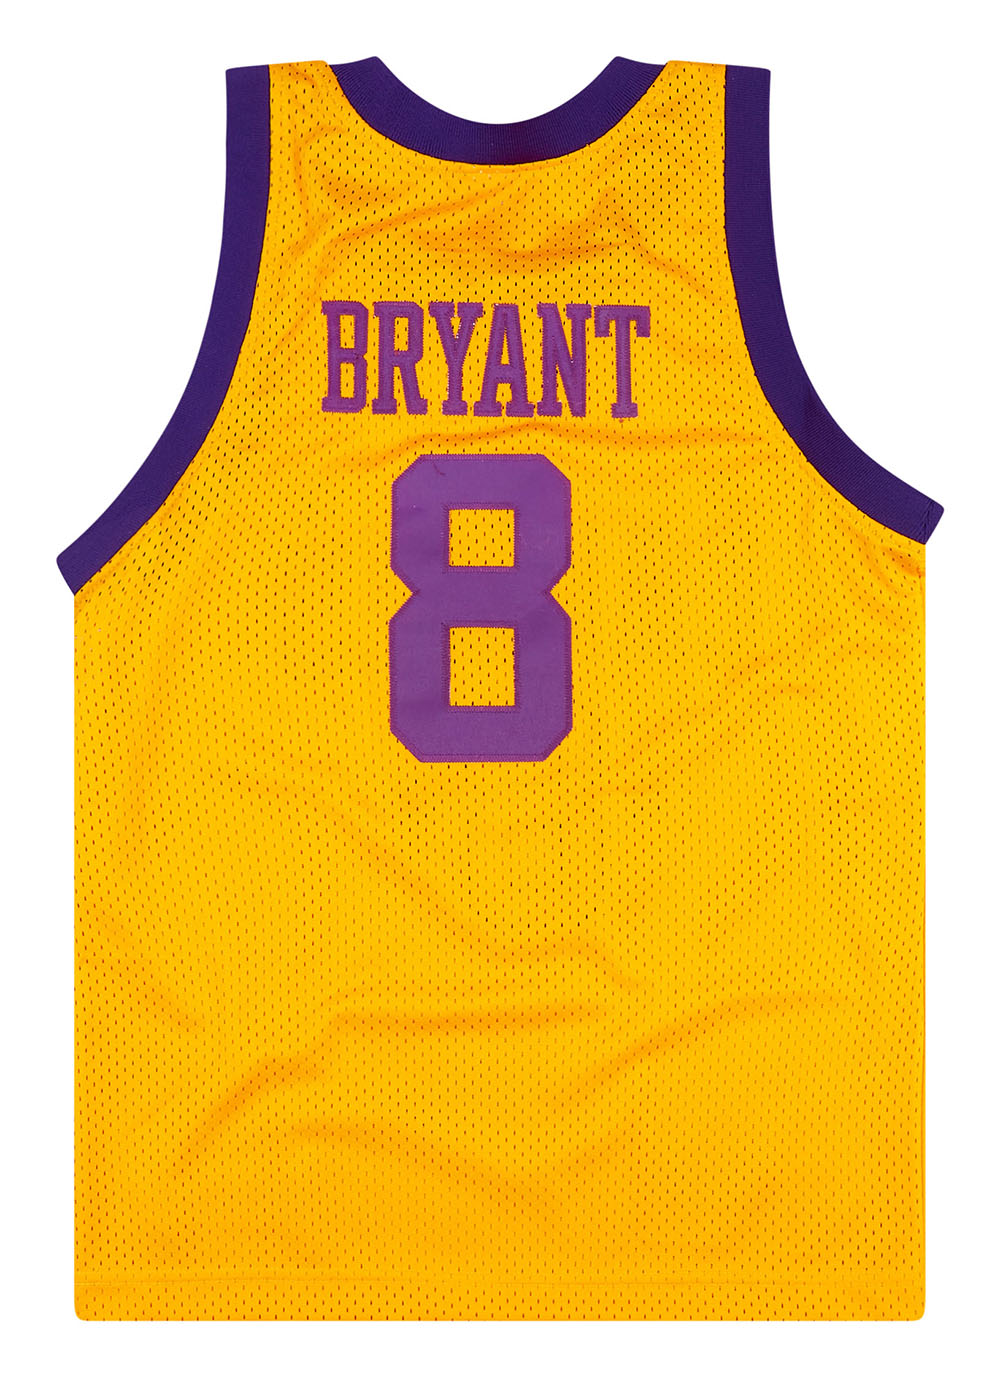 Kobe Bryant Throwback Lakers Jerseys, Vintage NBA Gear